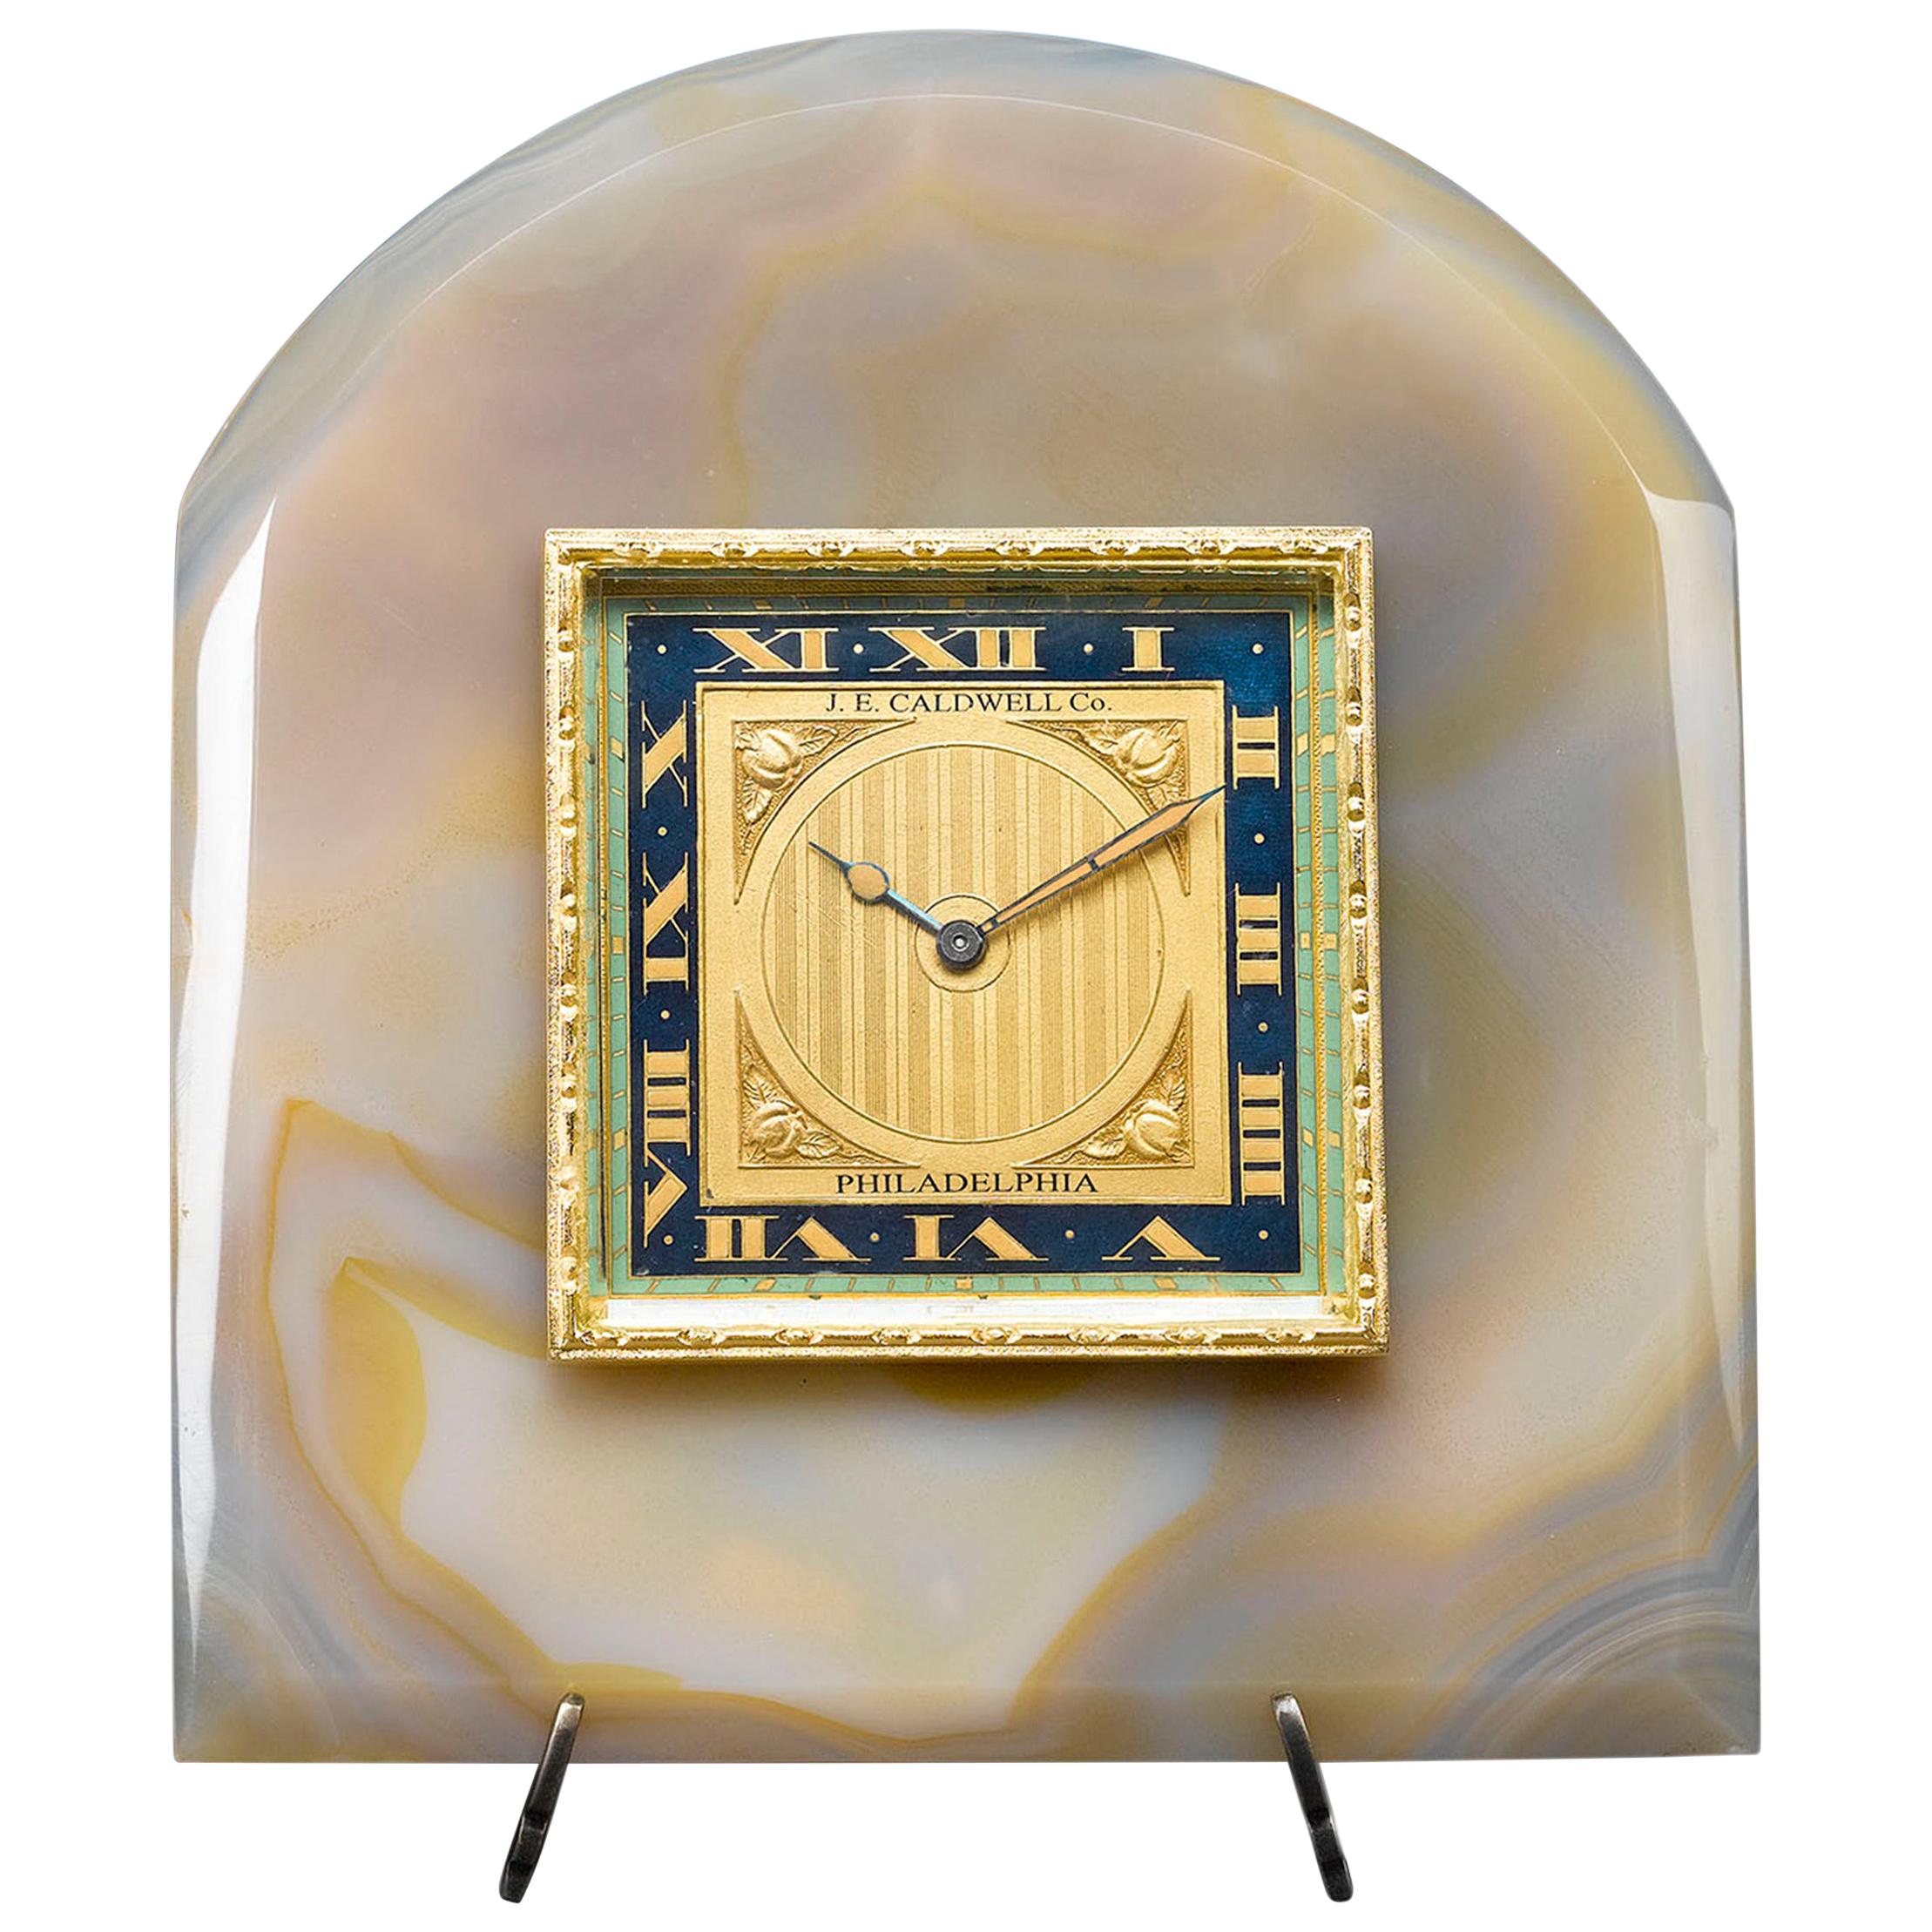 Onyx and Enamel Desk Clock by J.E. Caldwell